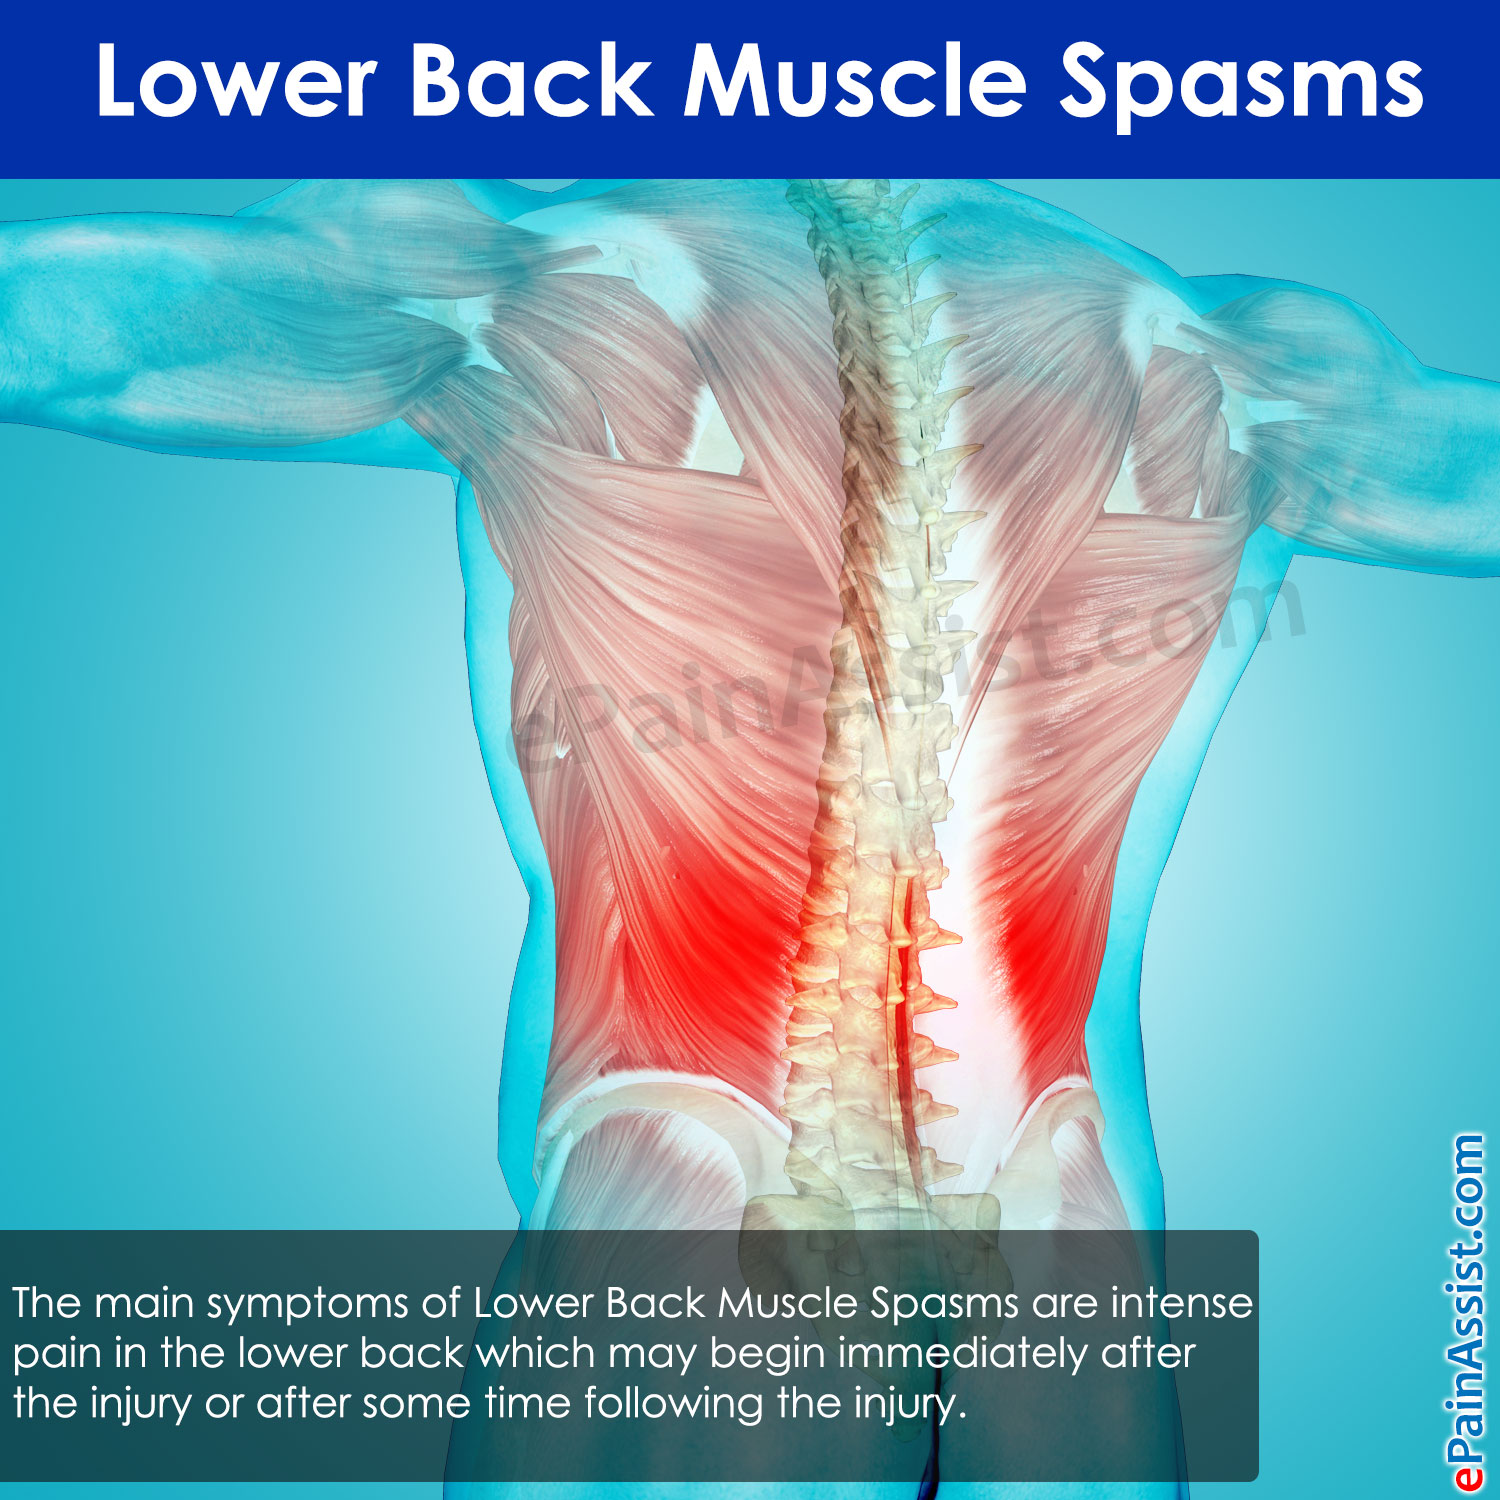 Understanding Lower Back Pain